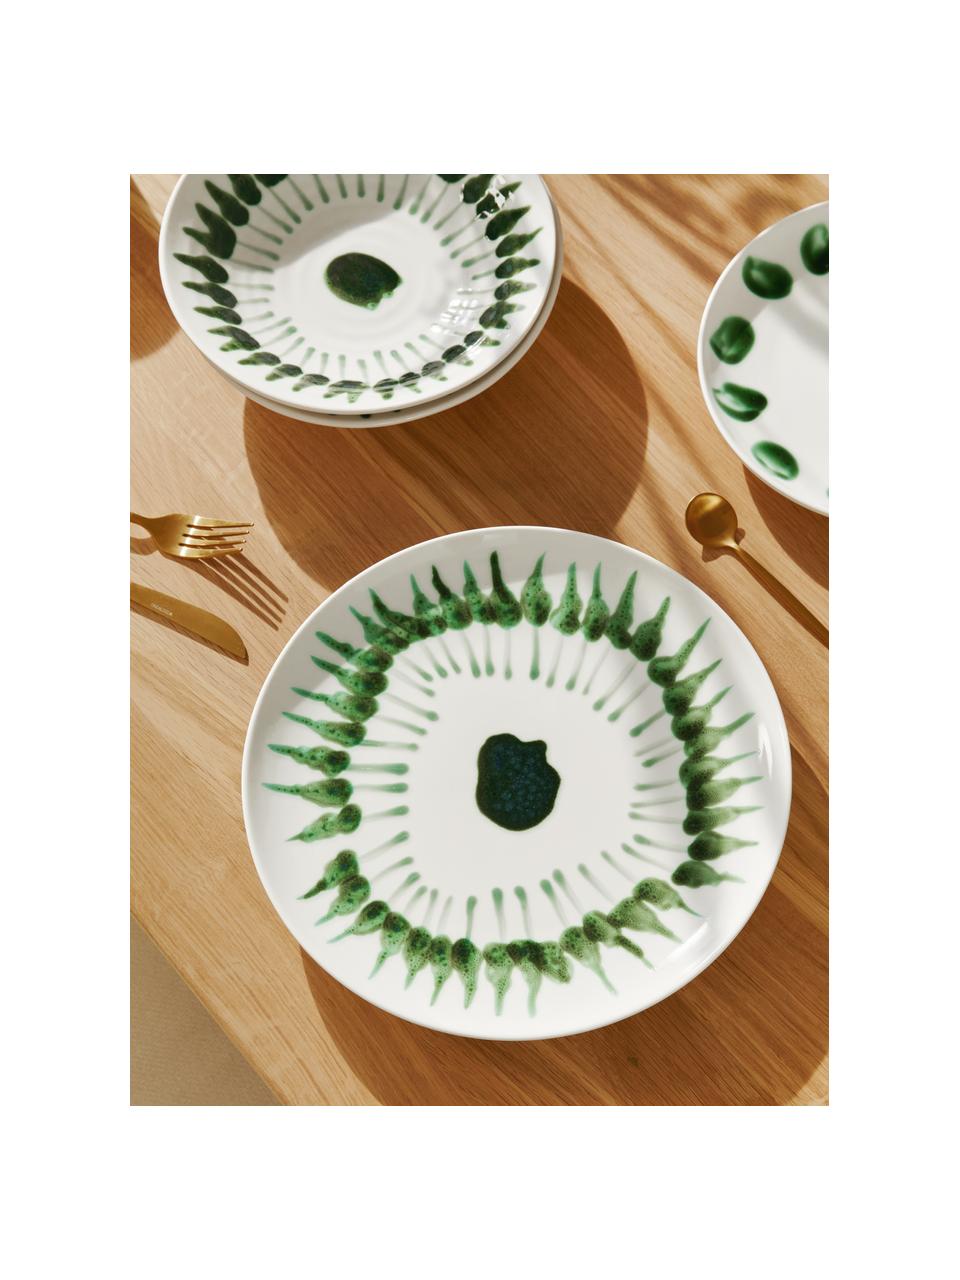 Assiette plate peinte main Sparks, Grès cérame, Blanc, vert, Ø 28 cm